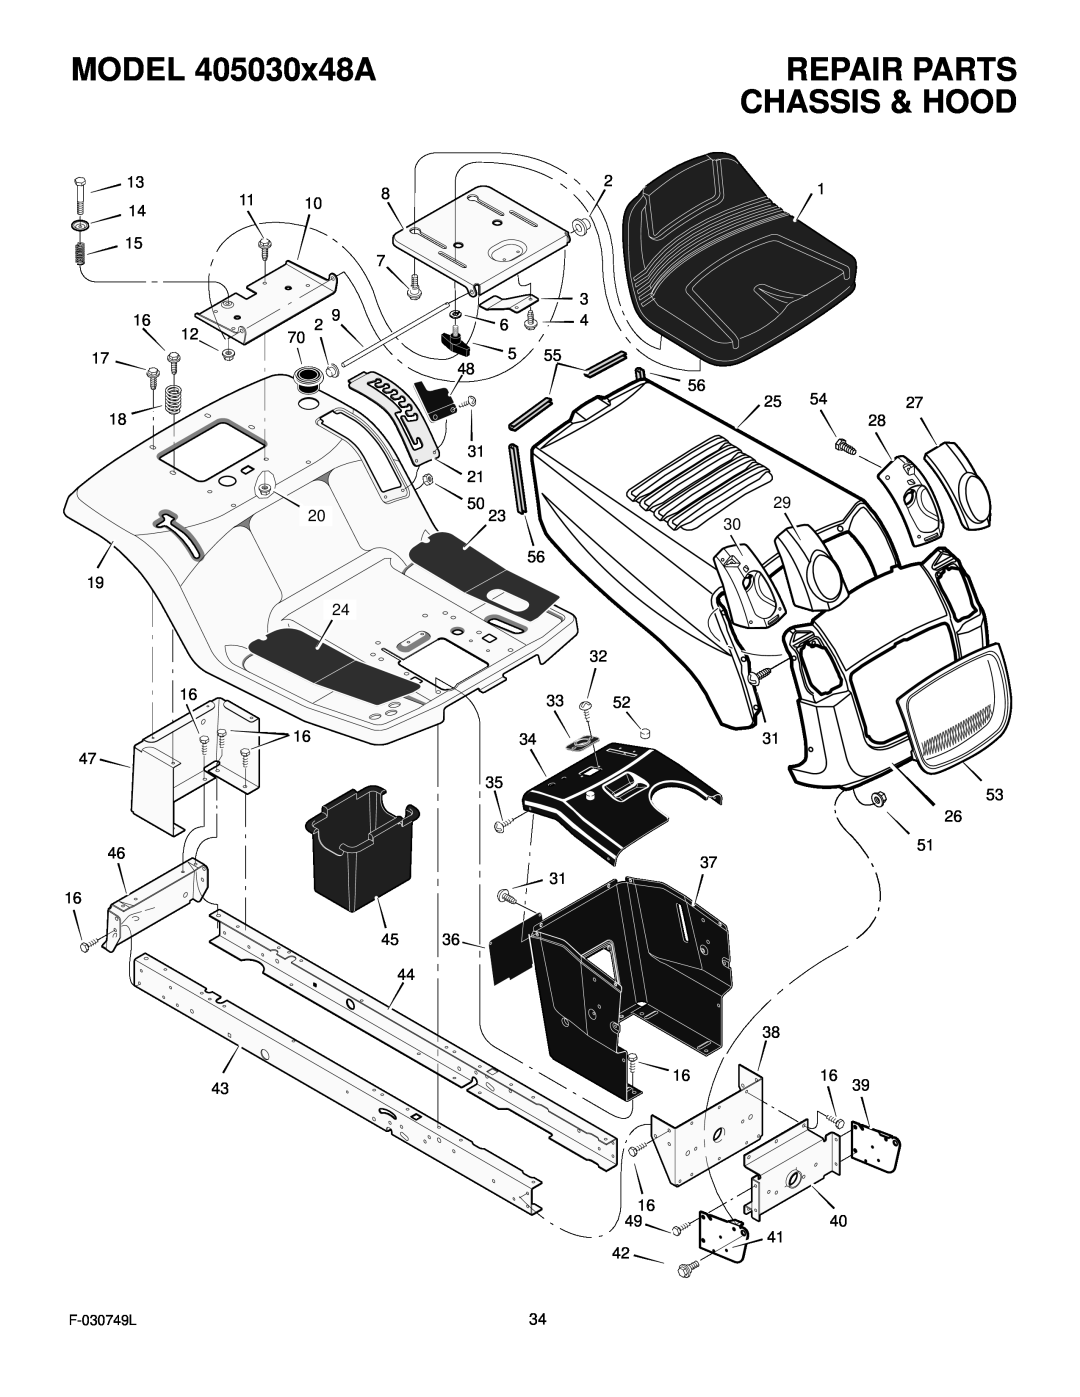 Murray manual MODEL 405030x48A, Repair Parts, Chassis & Hood, F-030749L 